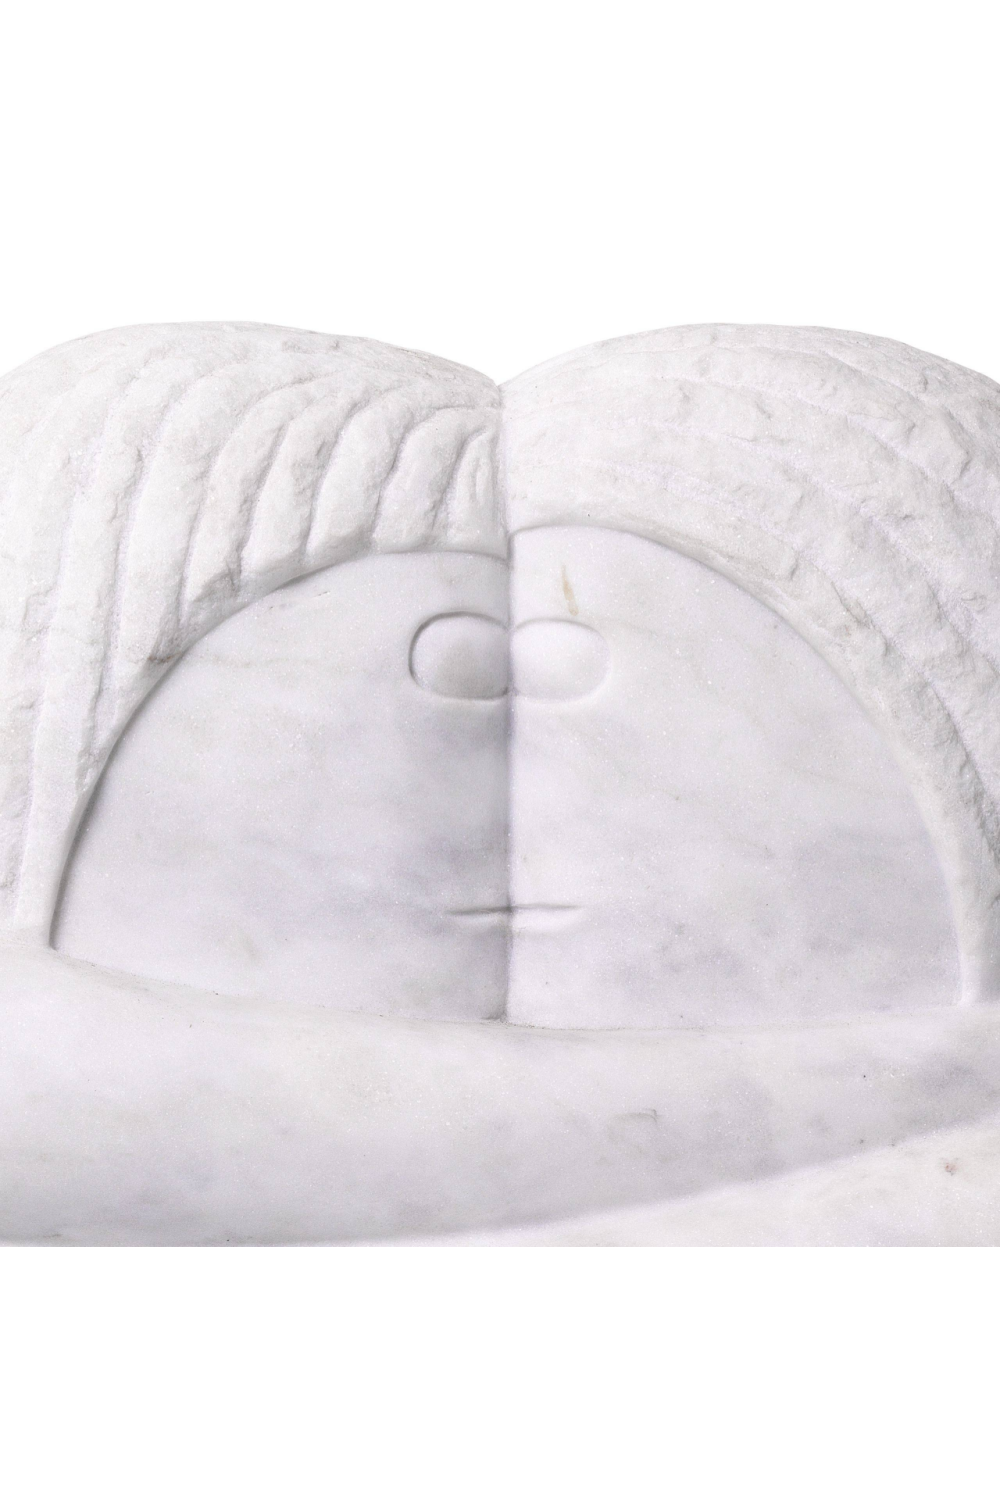 White Marble Statue | Eichholtz Object Love Couple | OROA